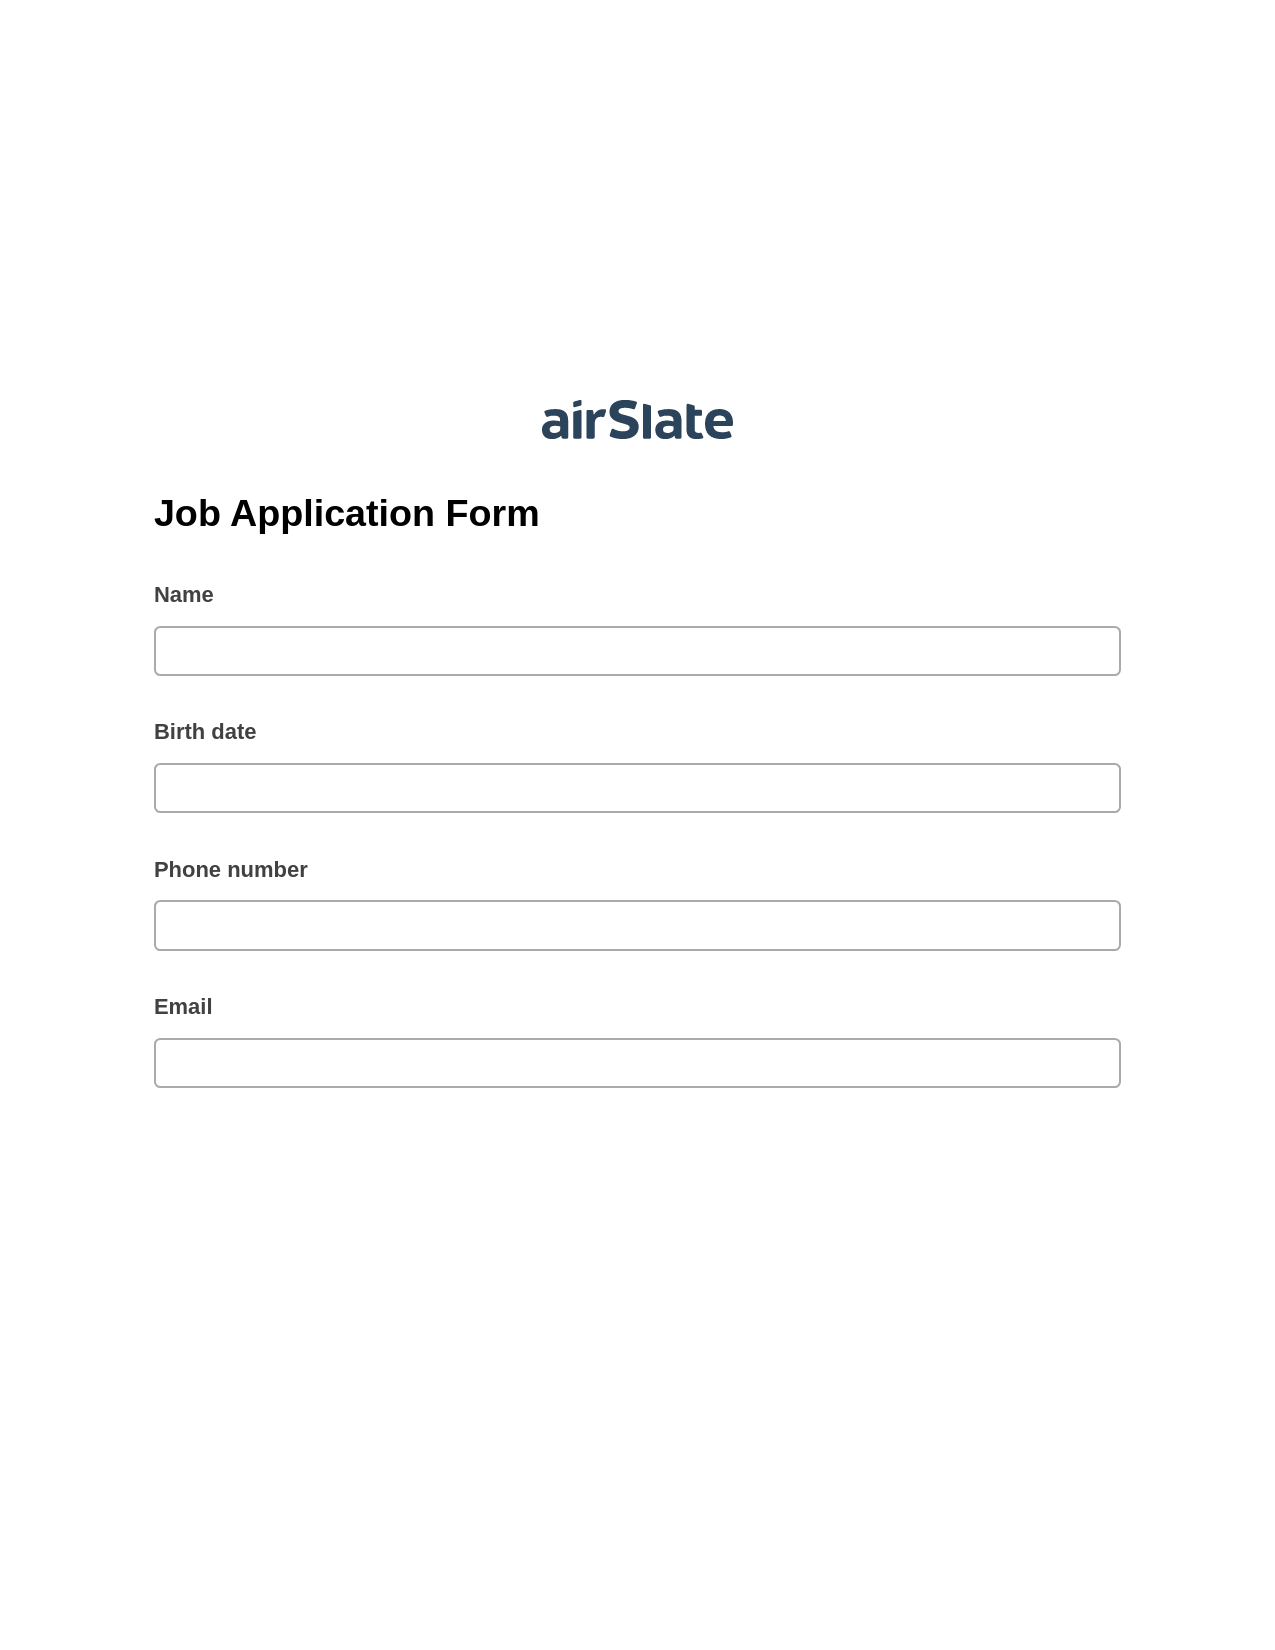 Job Application Form Pre-fill from Google Sheets Bot, Assign Slate Name Bot, Slack Two-Way Binding Bot